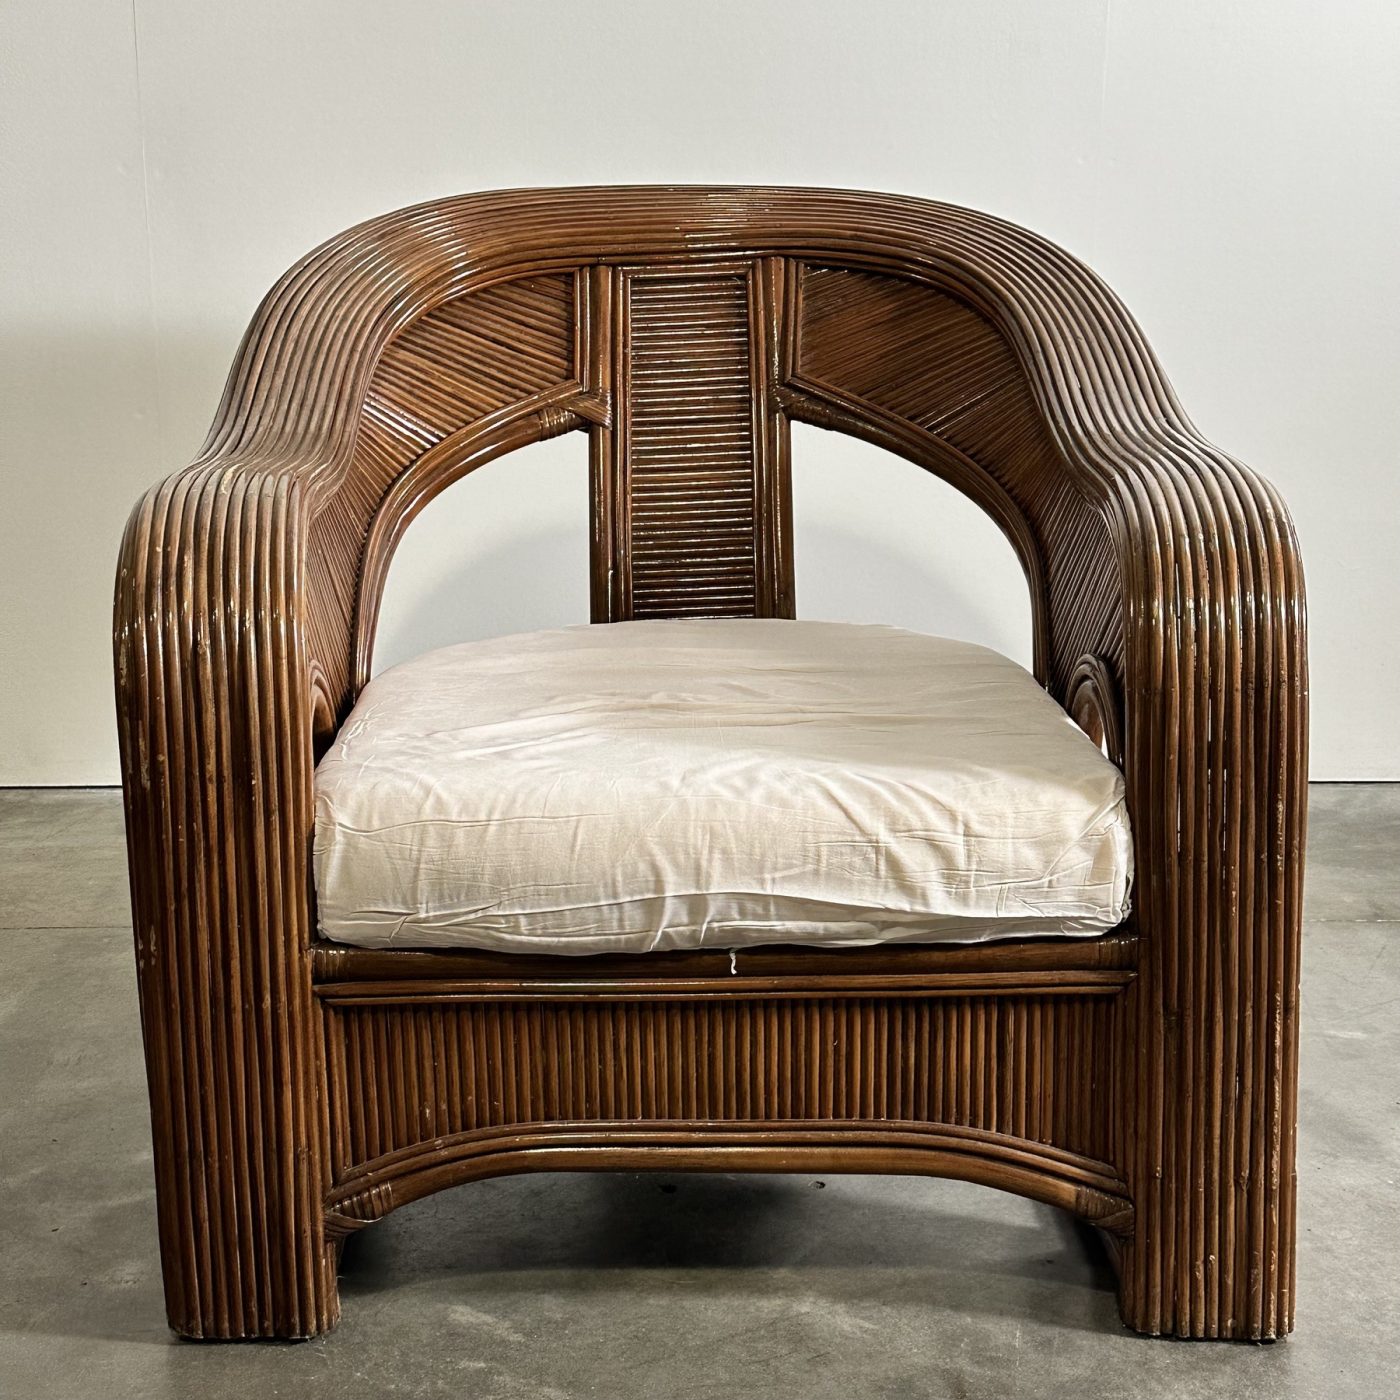 objet-vagabond-rattan-armchairs0002